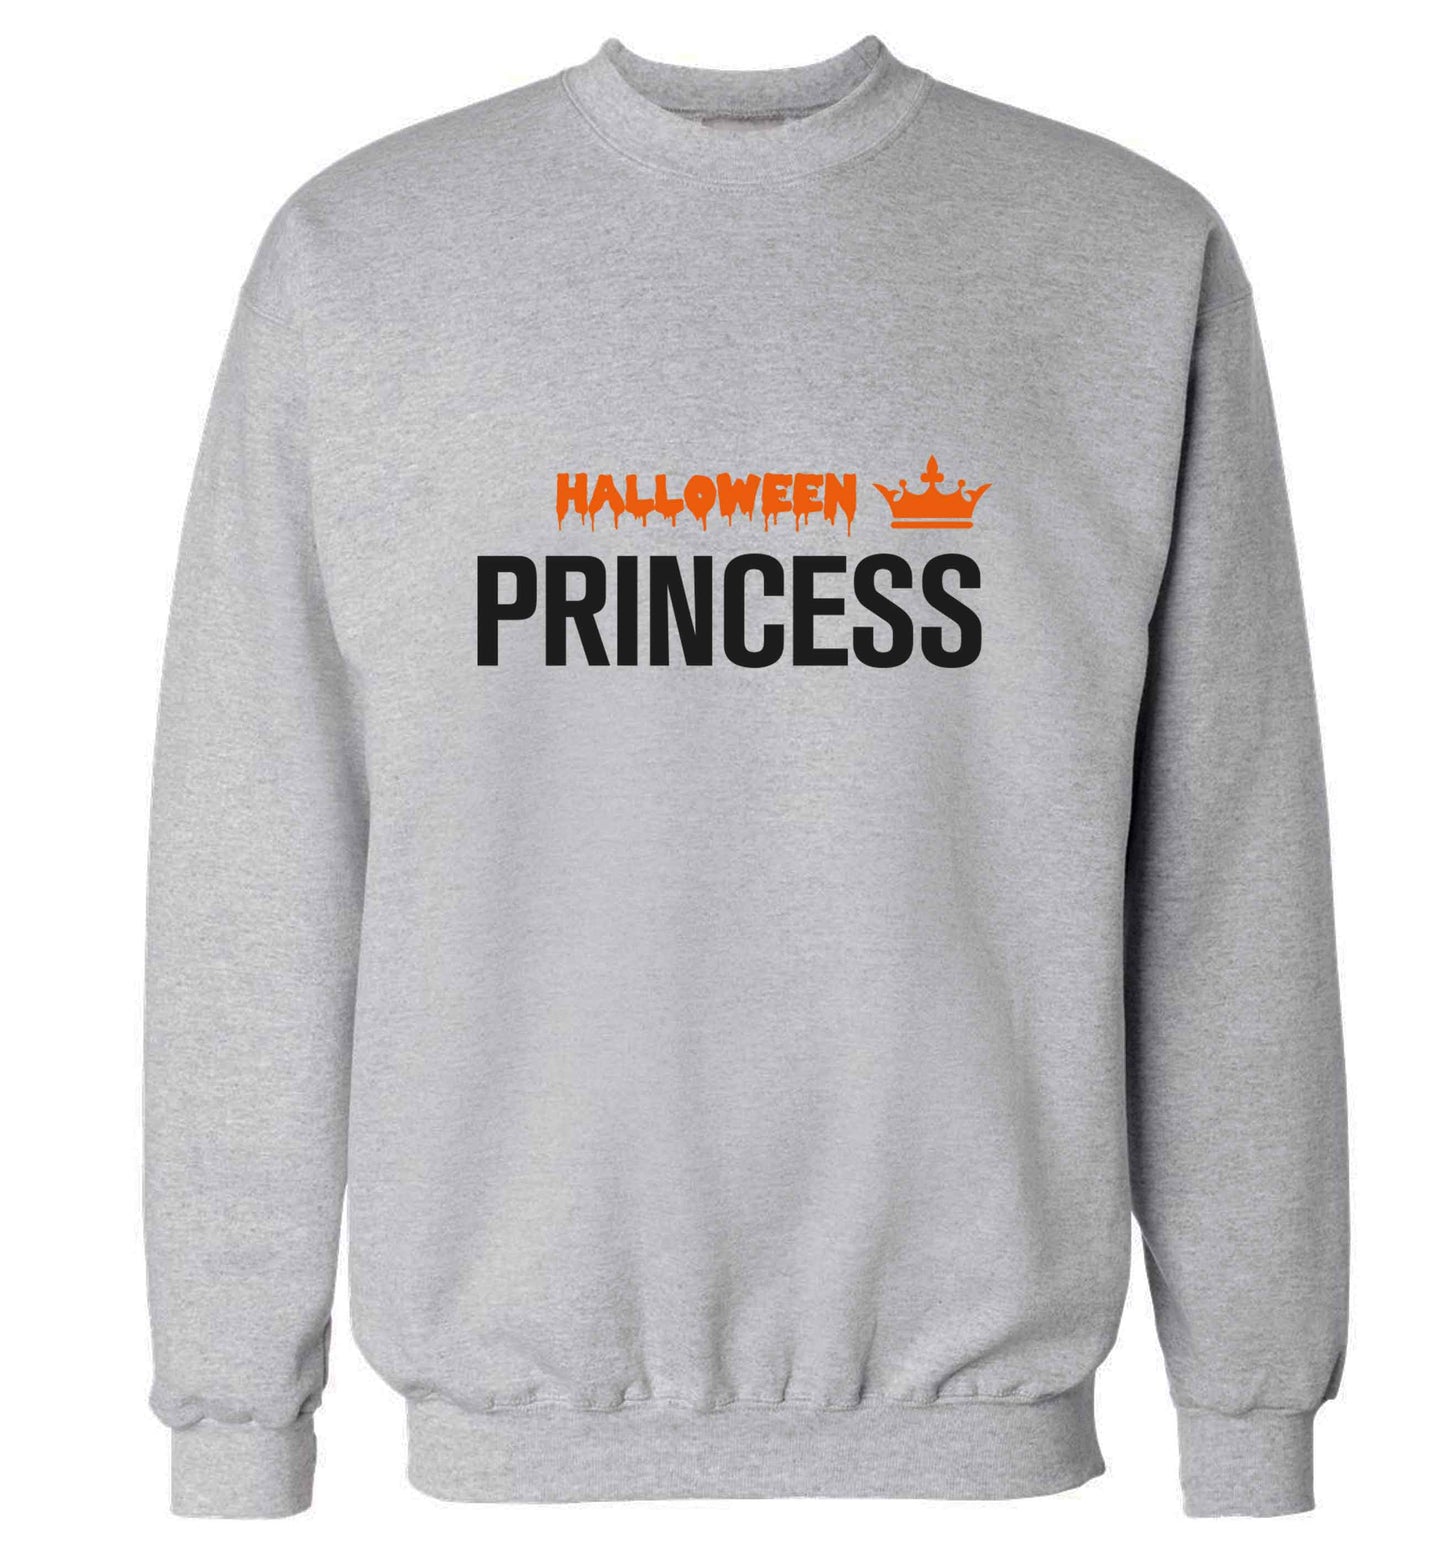 Halloween princess adult's unisex grey sweater 2XL